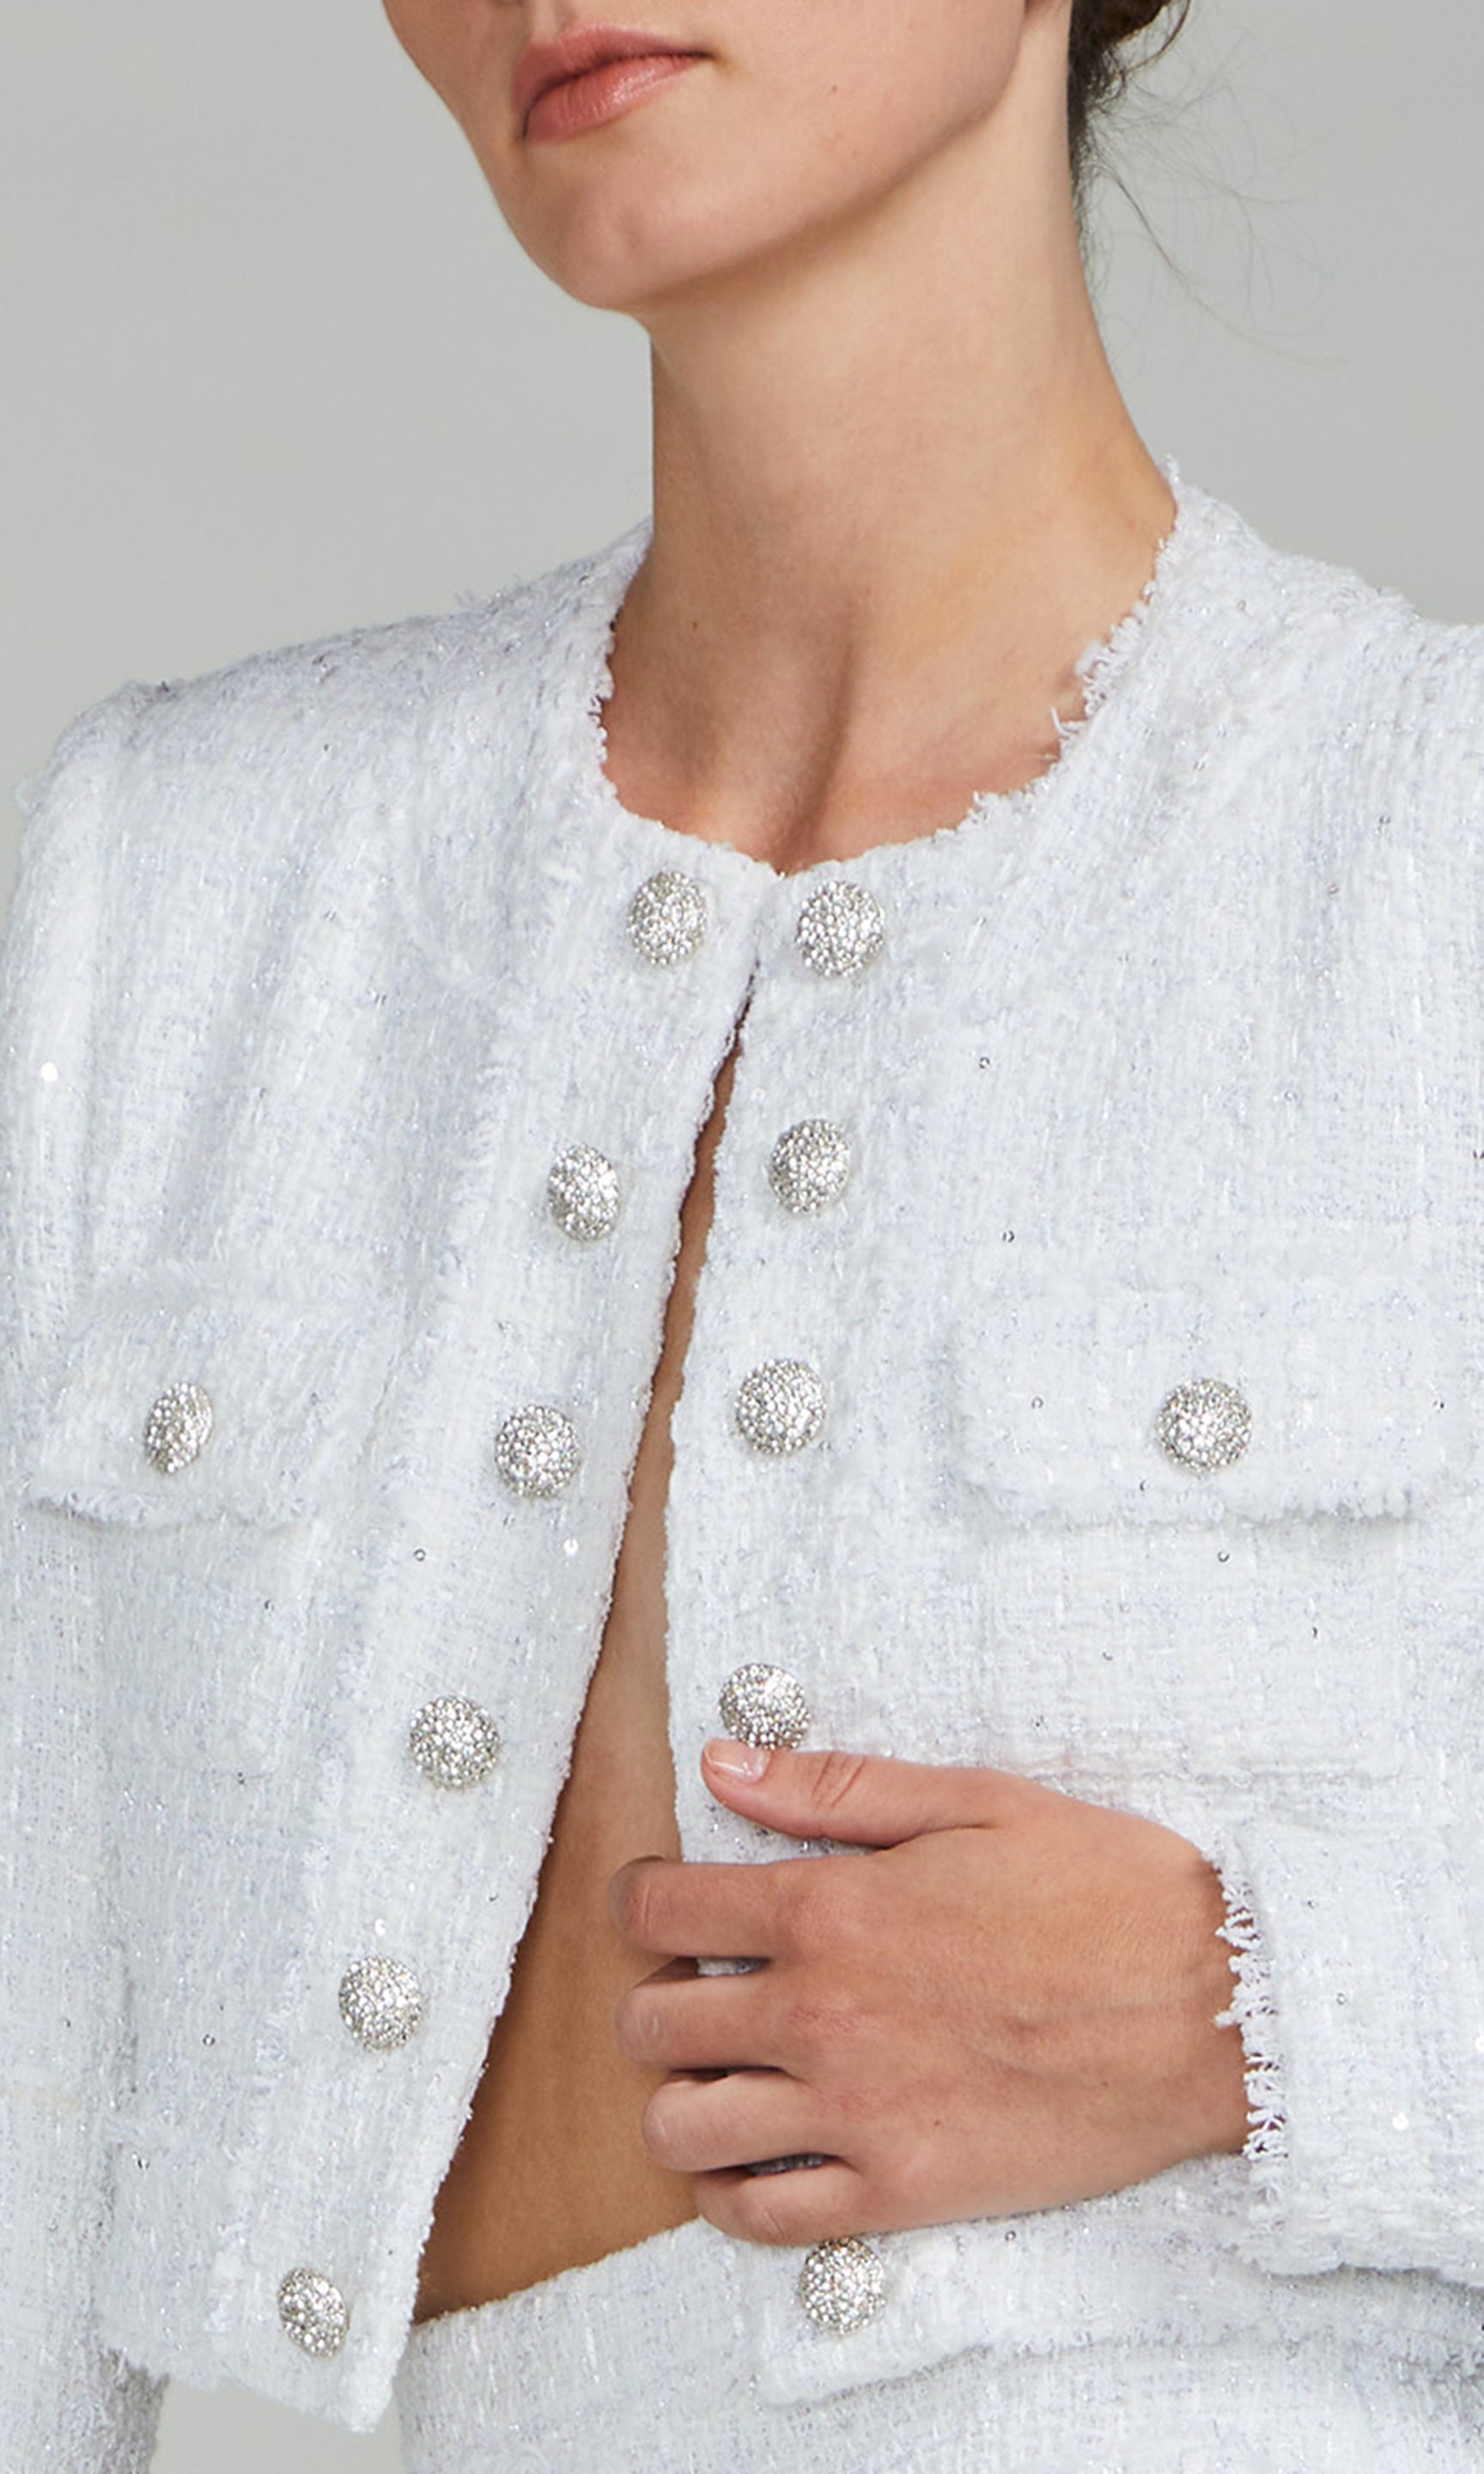 Generation Love Valentina Cropped Tweed Jacket S / White